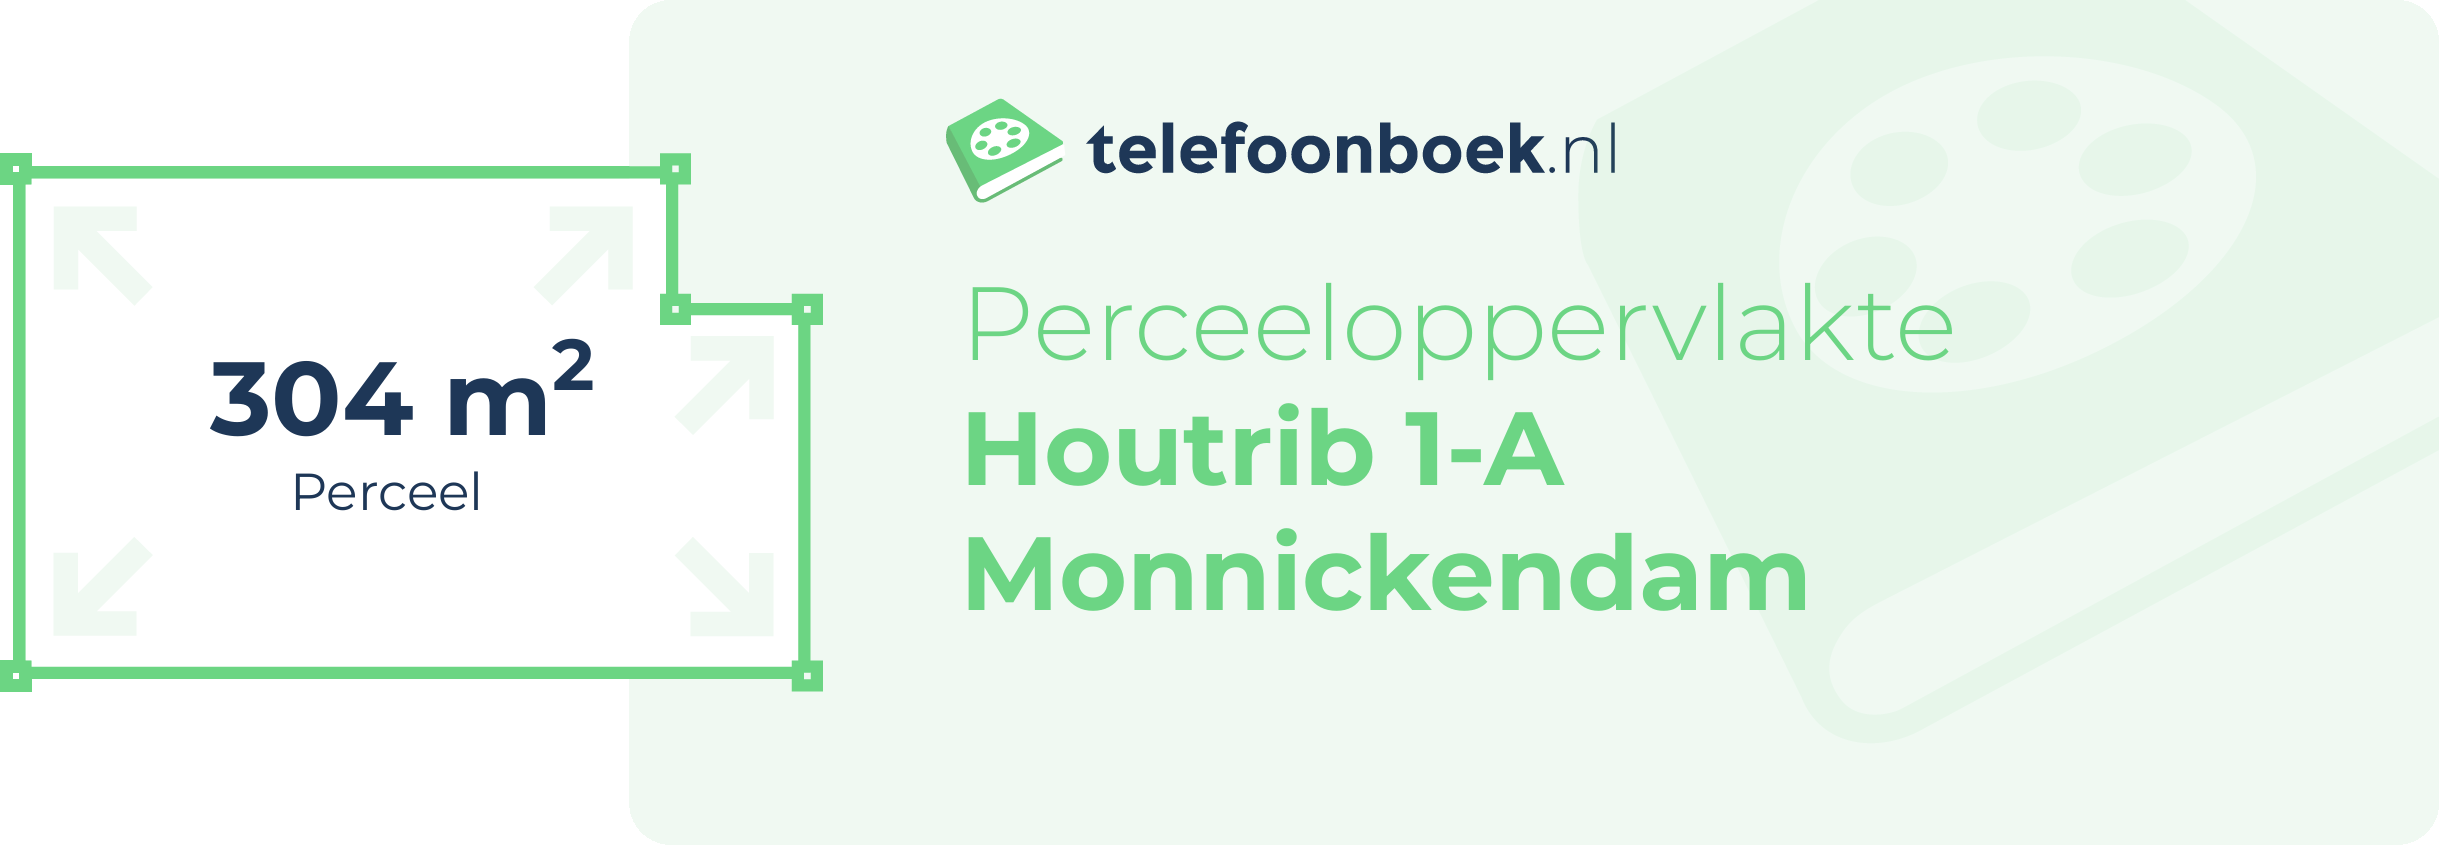 Perceeloppervlakte Houtrib 1-A Monnickendam